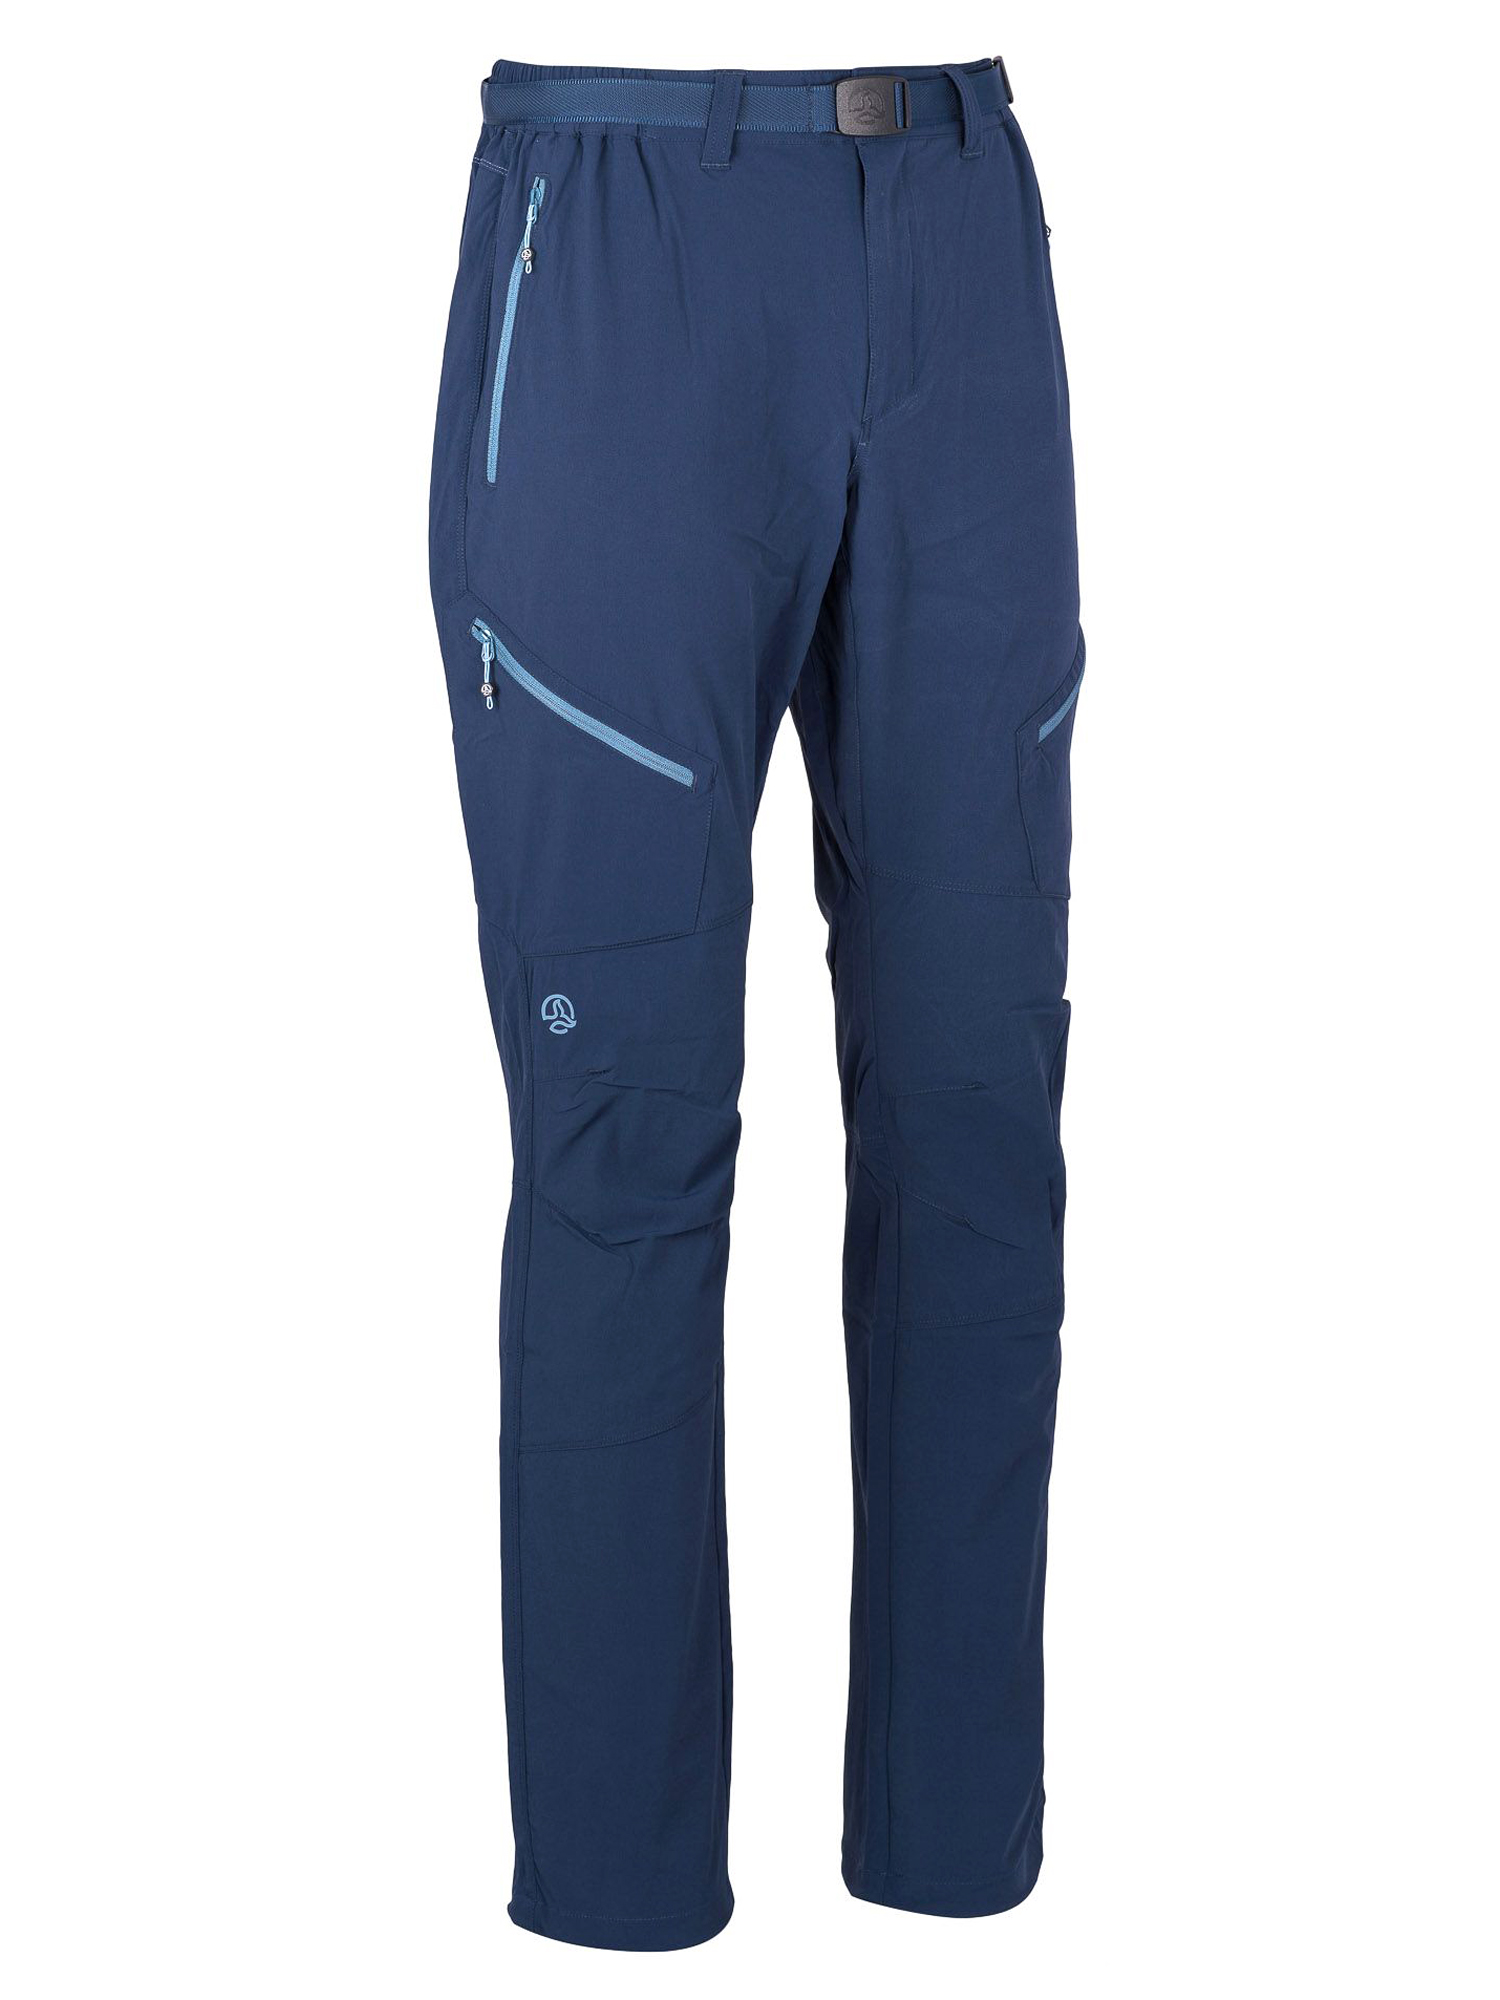 Спортивные брюки мужские Ternua Torlok Pt M синие L